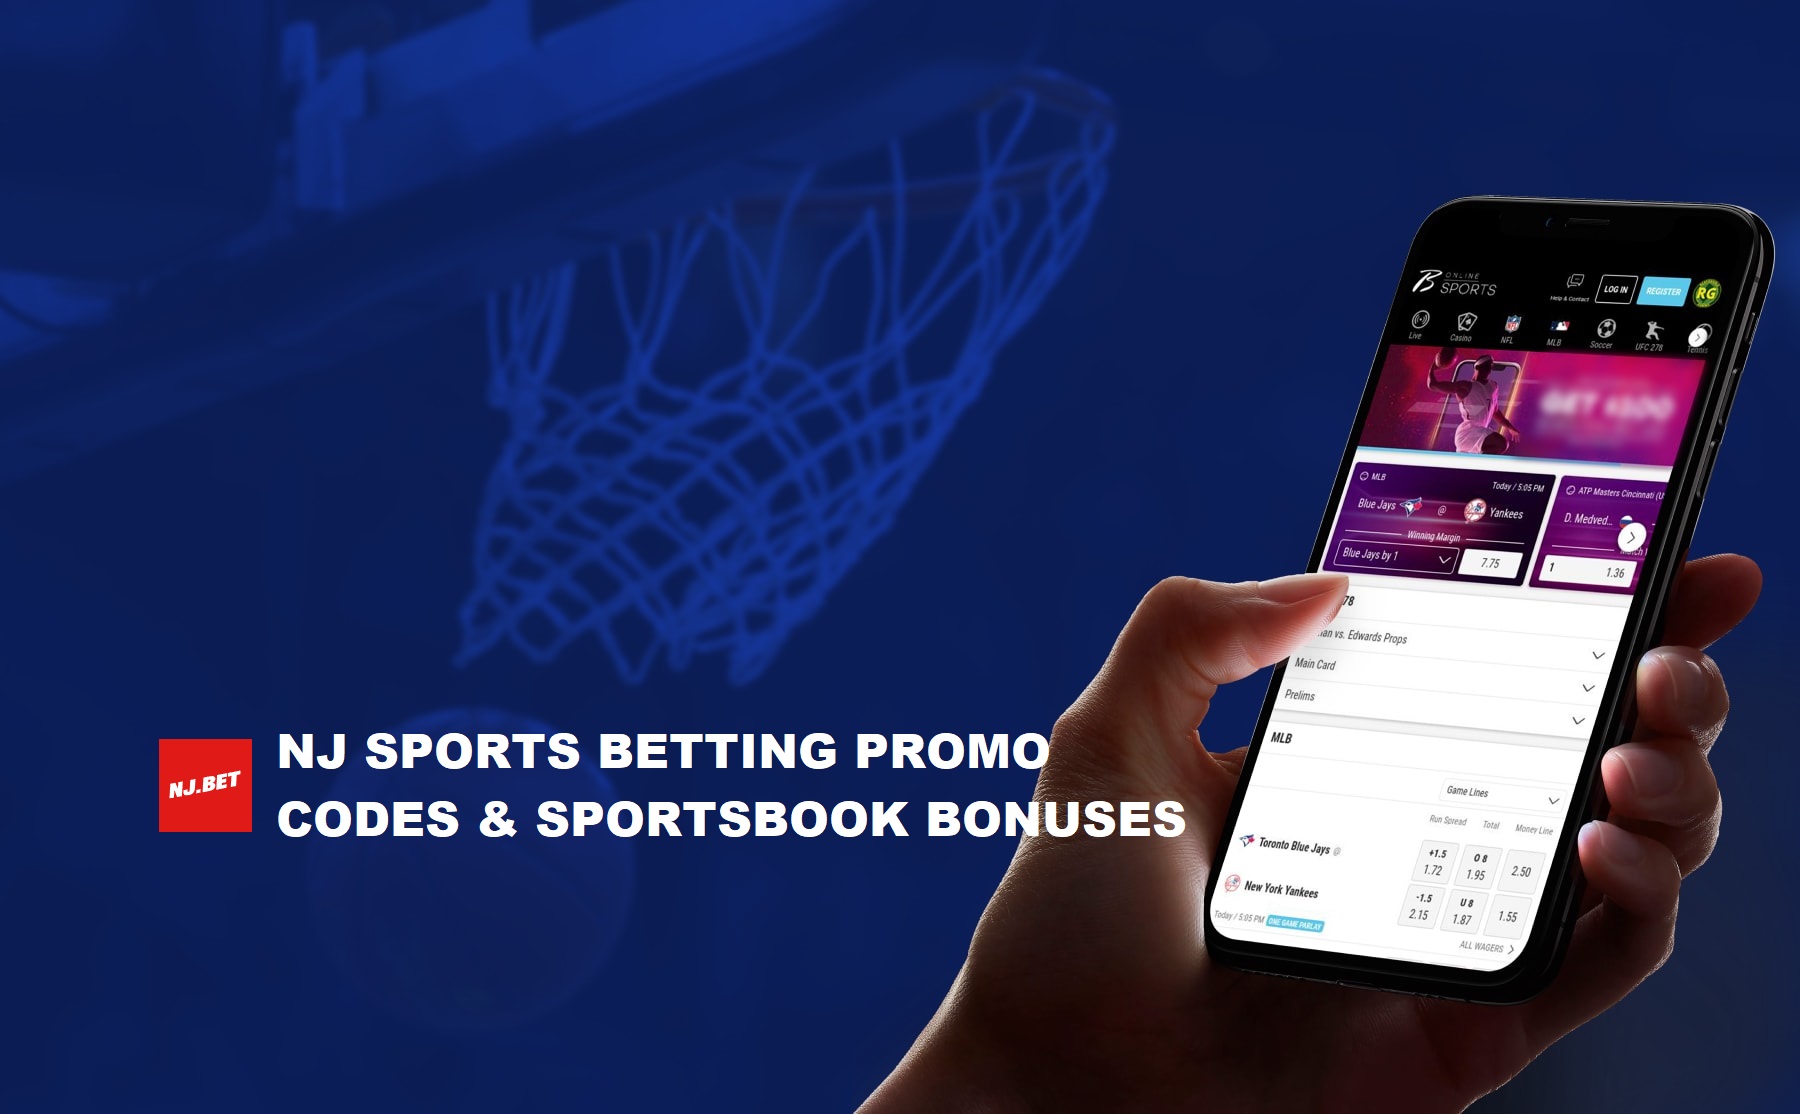 NJ Best Sportsbook Bonuses, Promo Codes and Free Bets